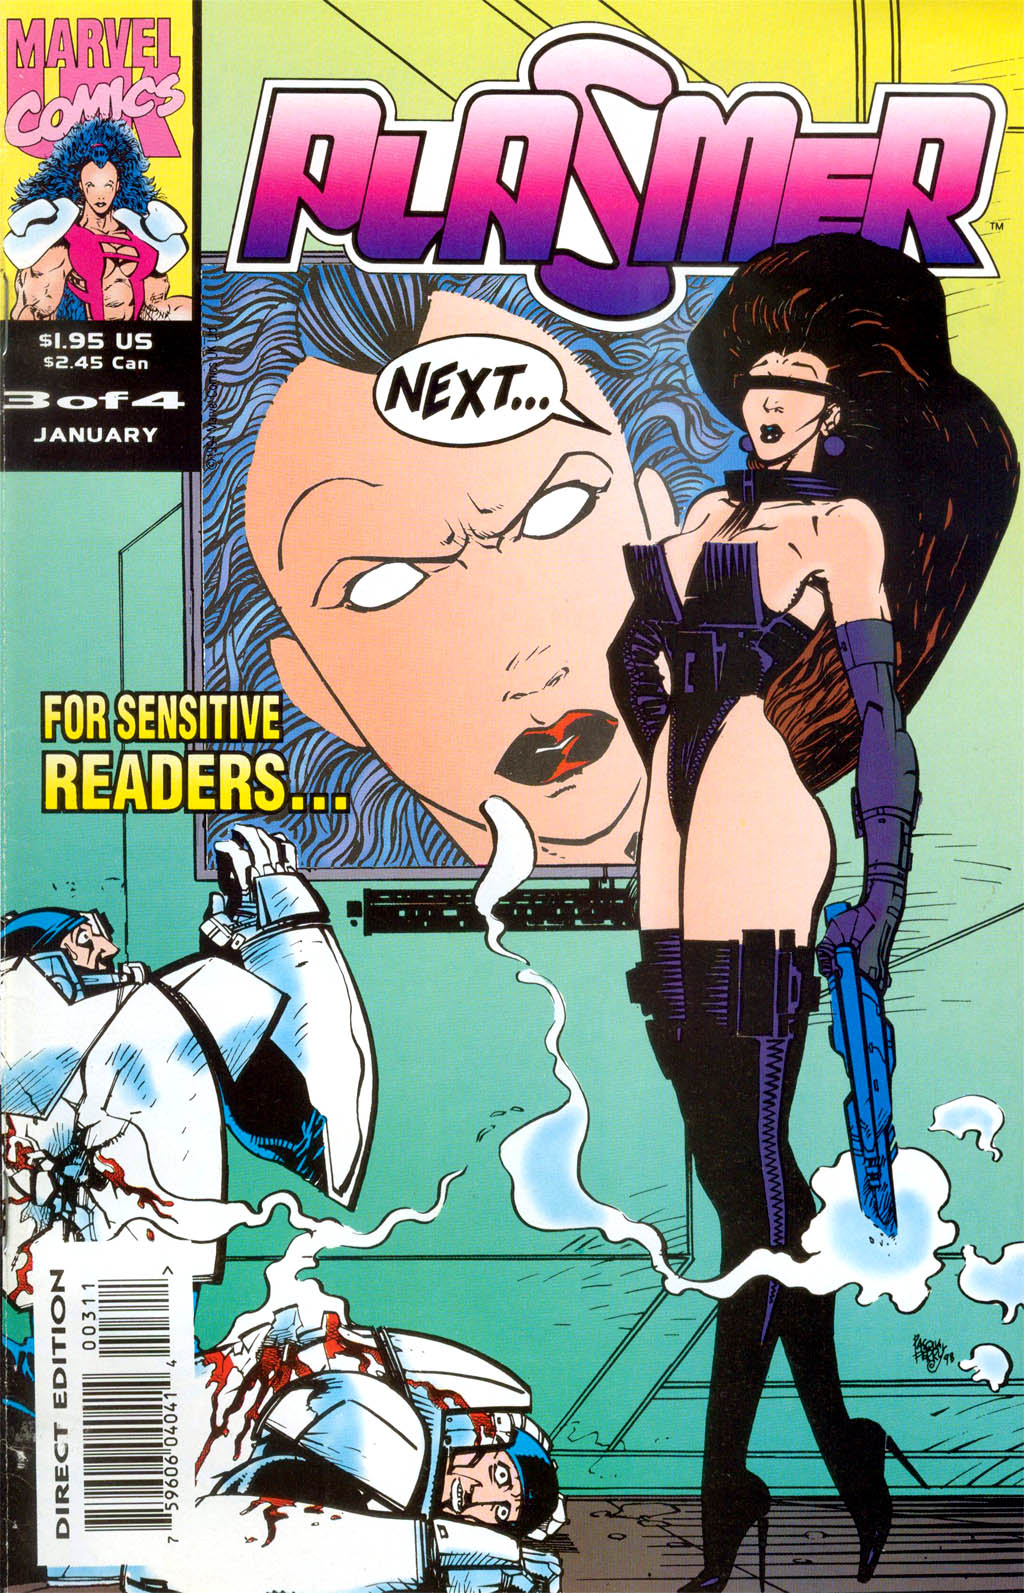 Read online Plasmer comic -  Issue #3 - 1